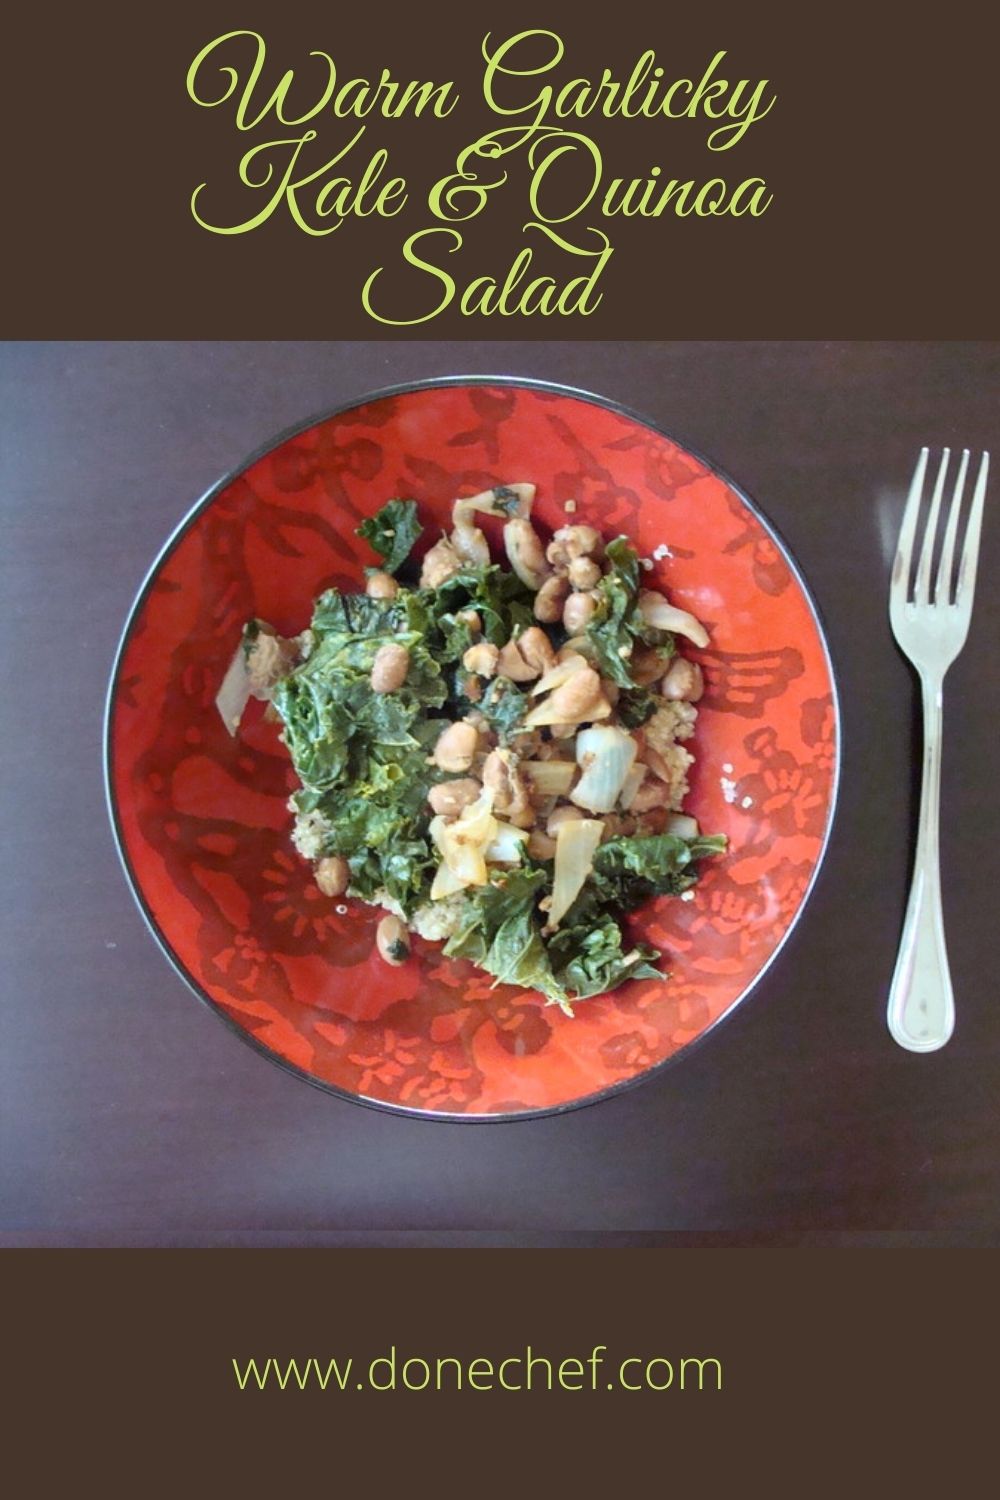 Warm Garlicky Kale & Quinoa Salad